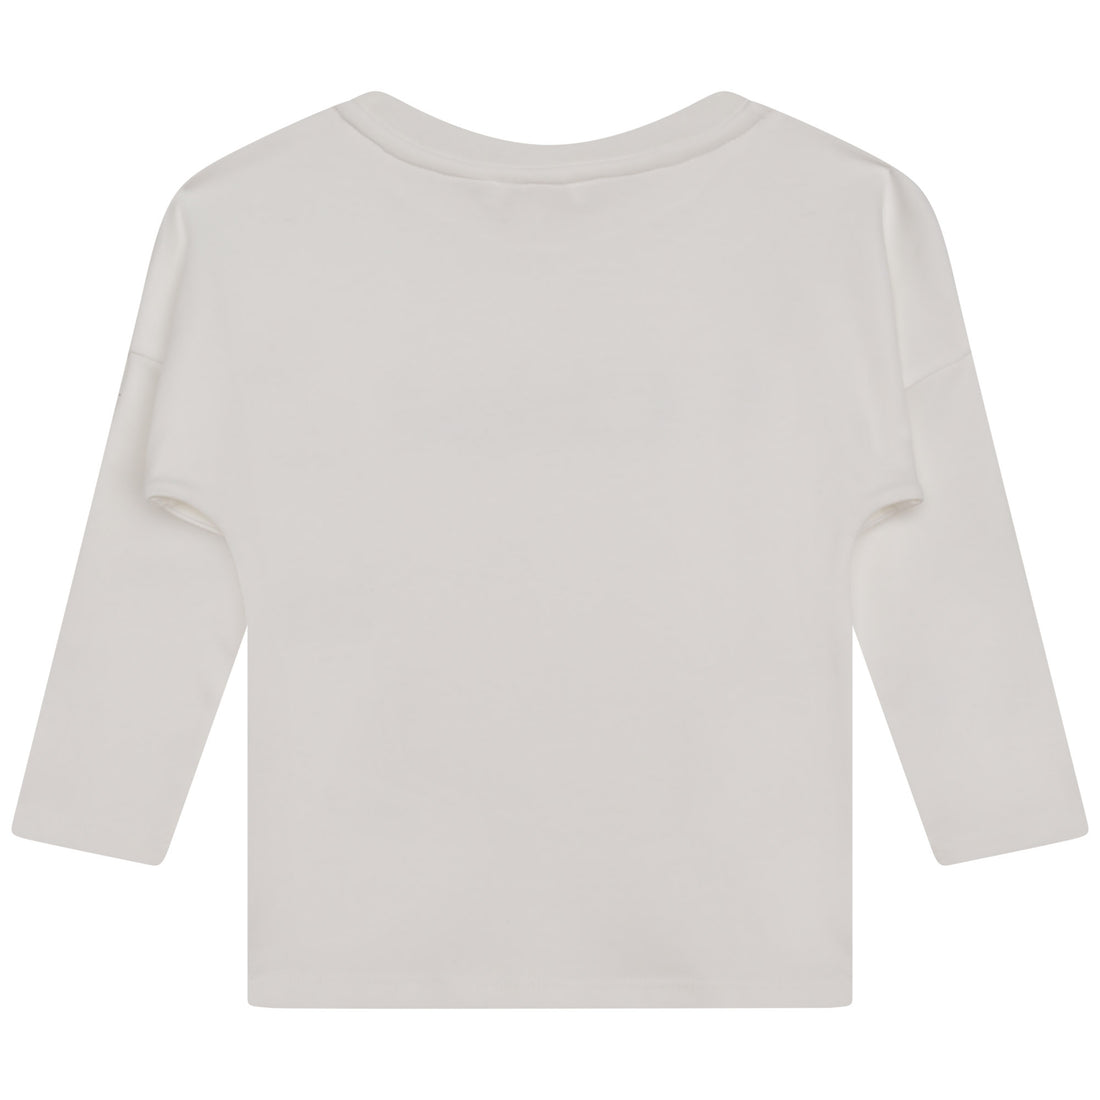 Chloe Long Sleeve T-Shirt Style: C15D70